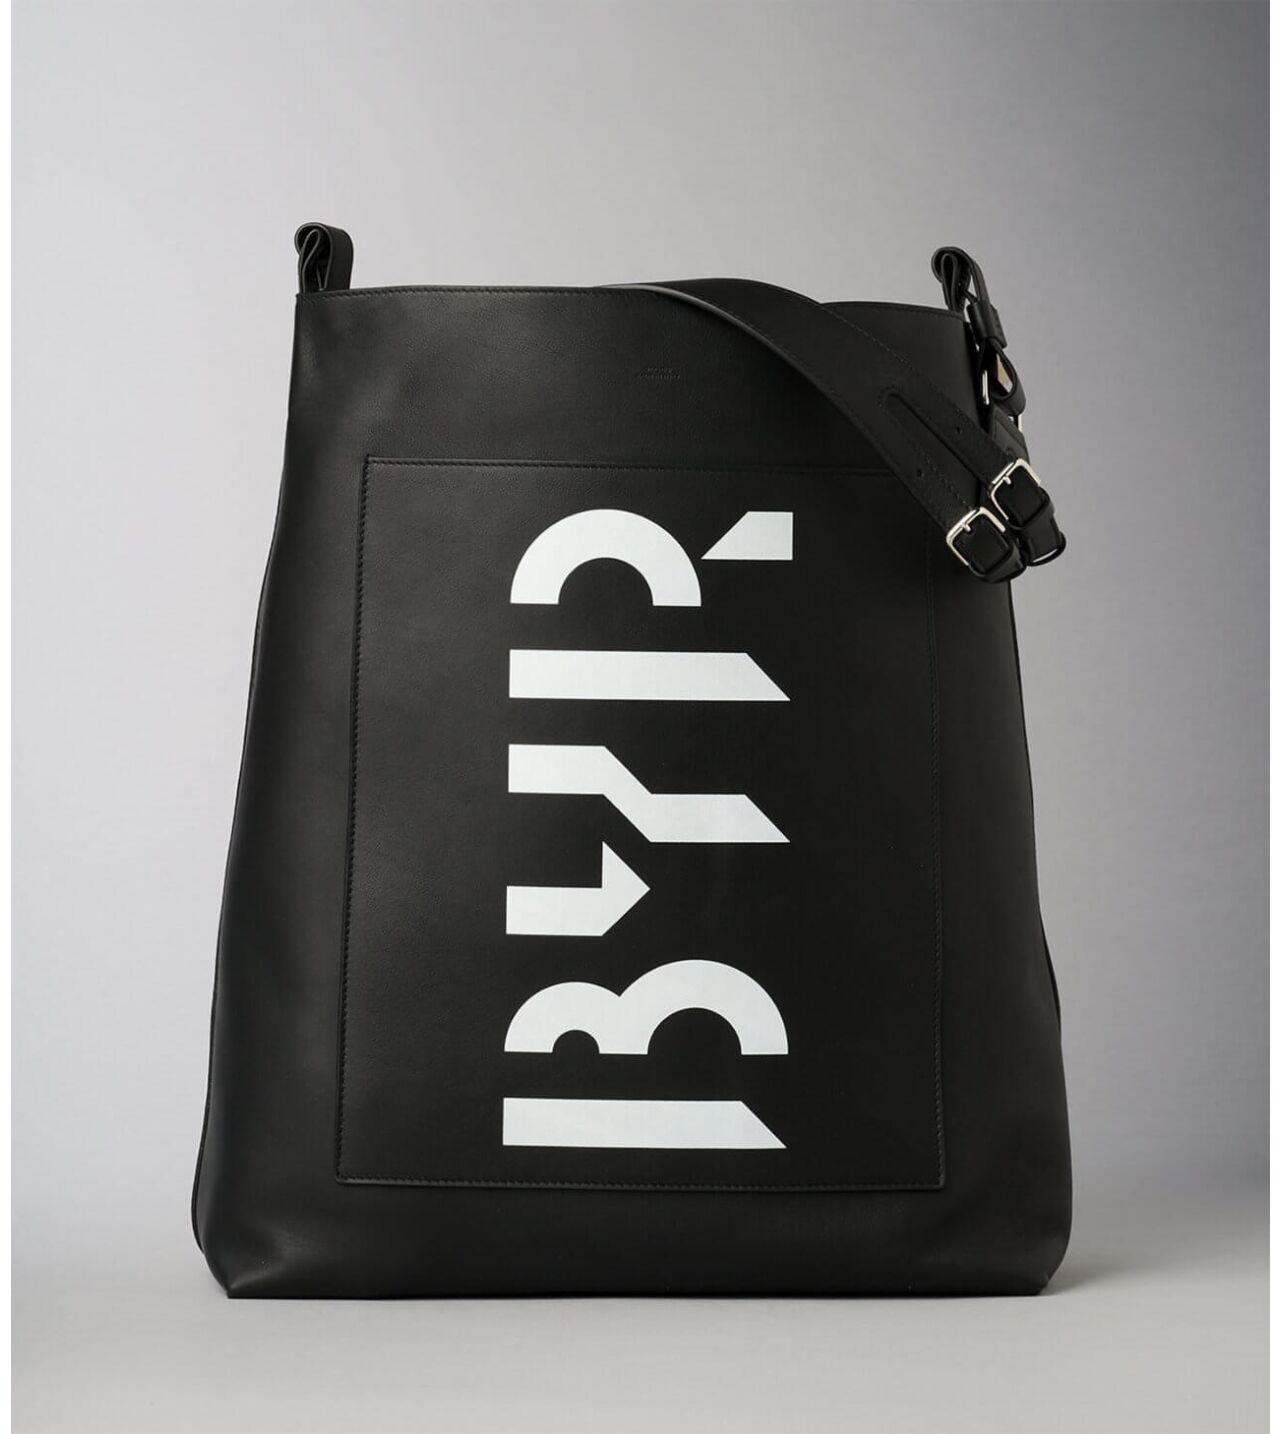 Walk around Expertise binary BYREDO - Eazy bag in printed leather